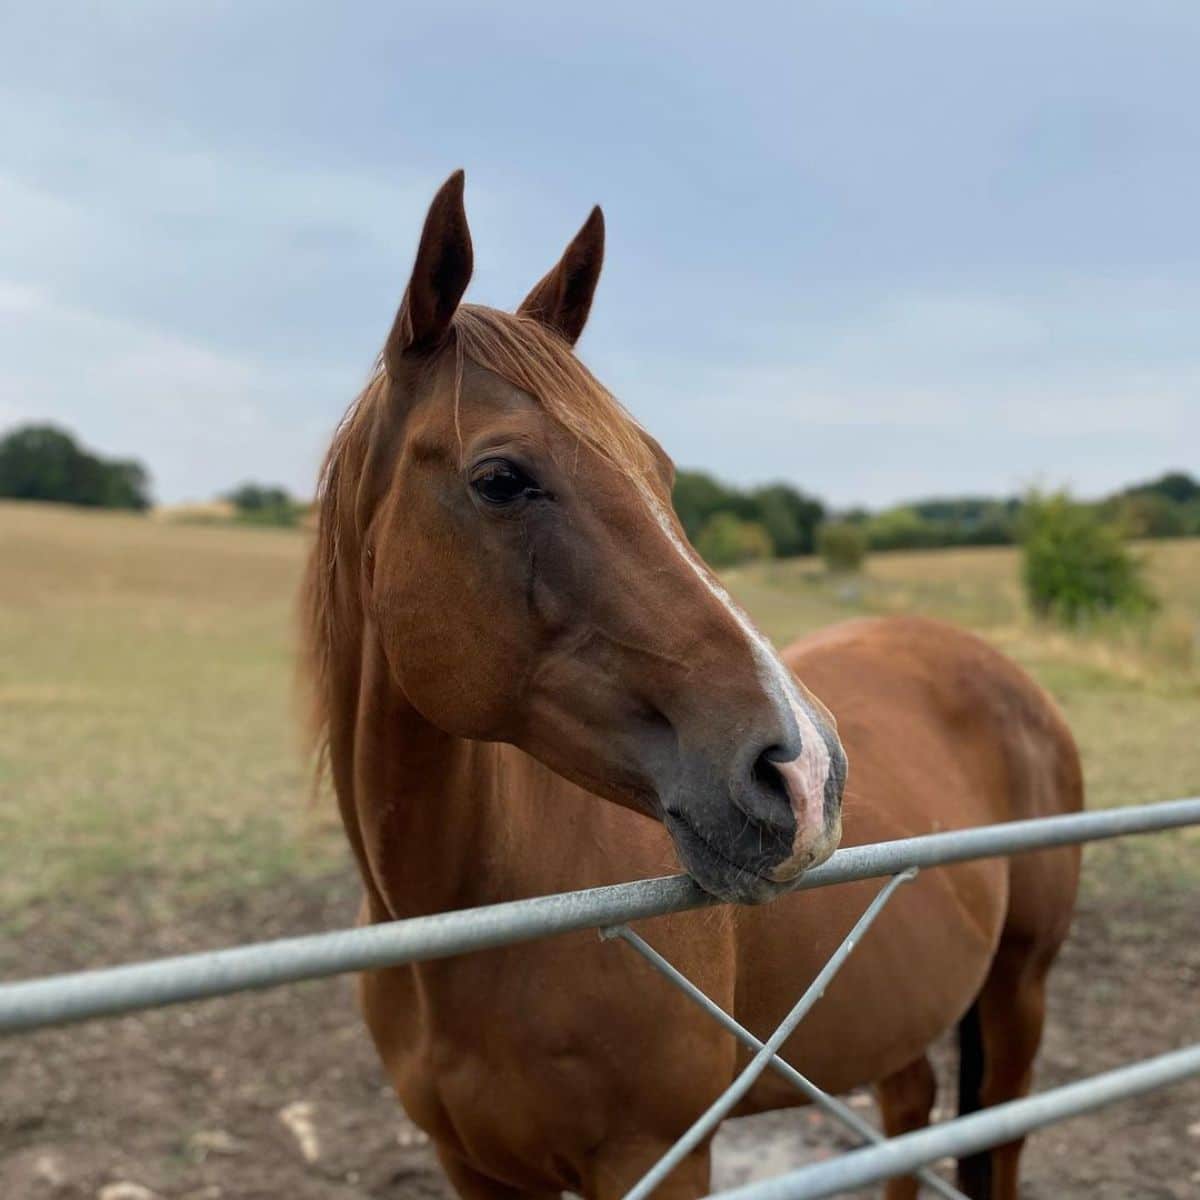 An elegant brown Appaloosa horse peeking over a metal fence.